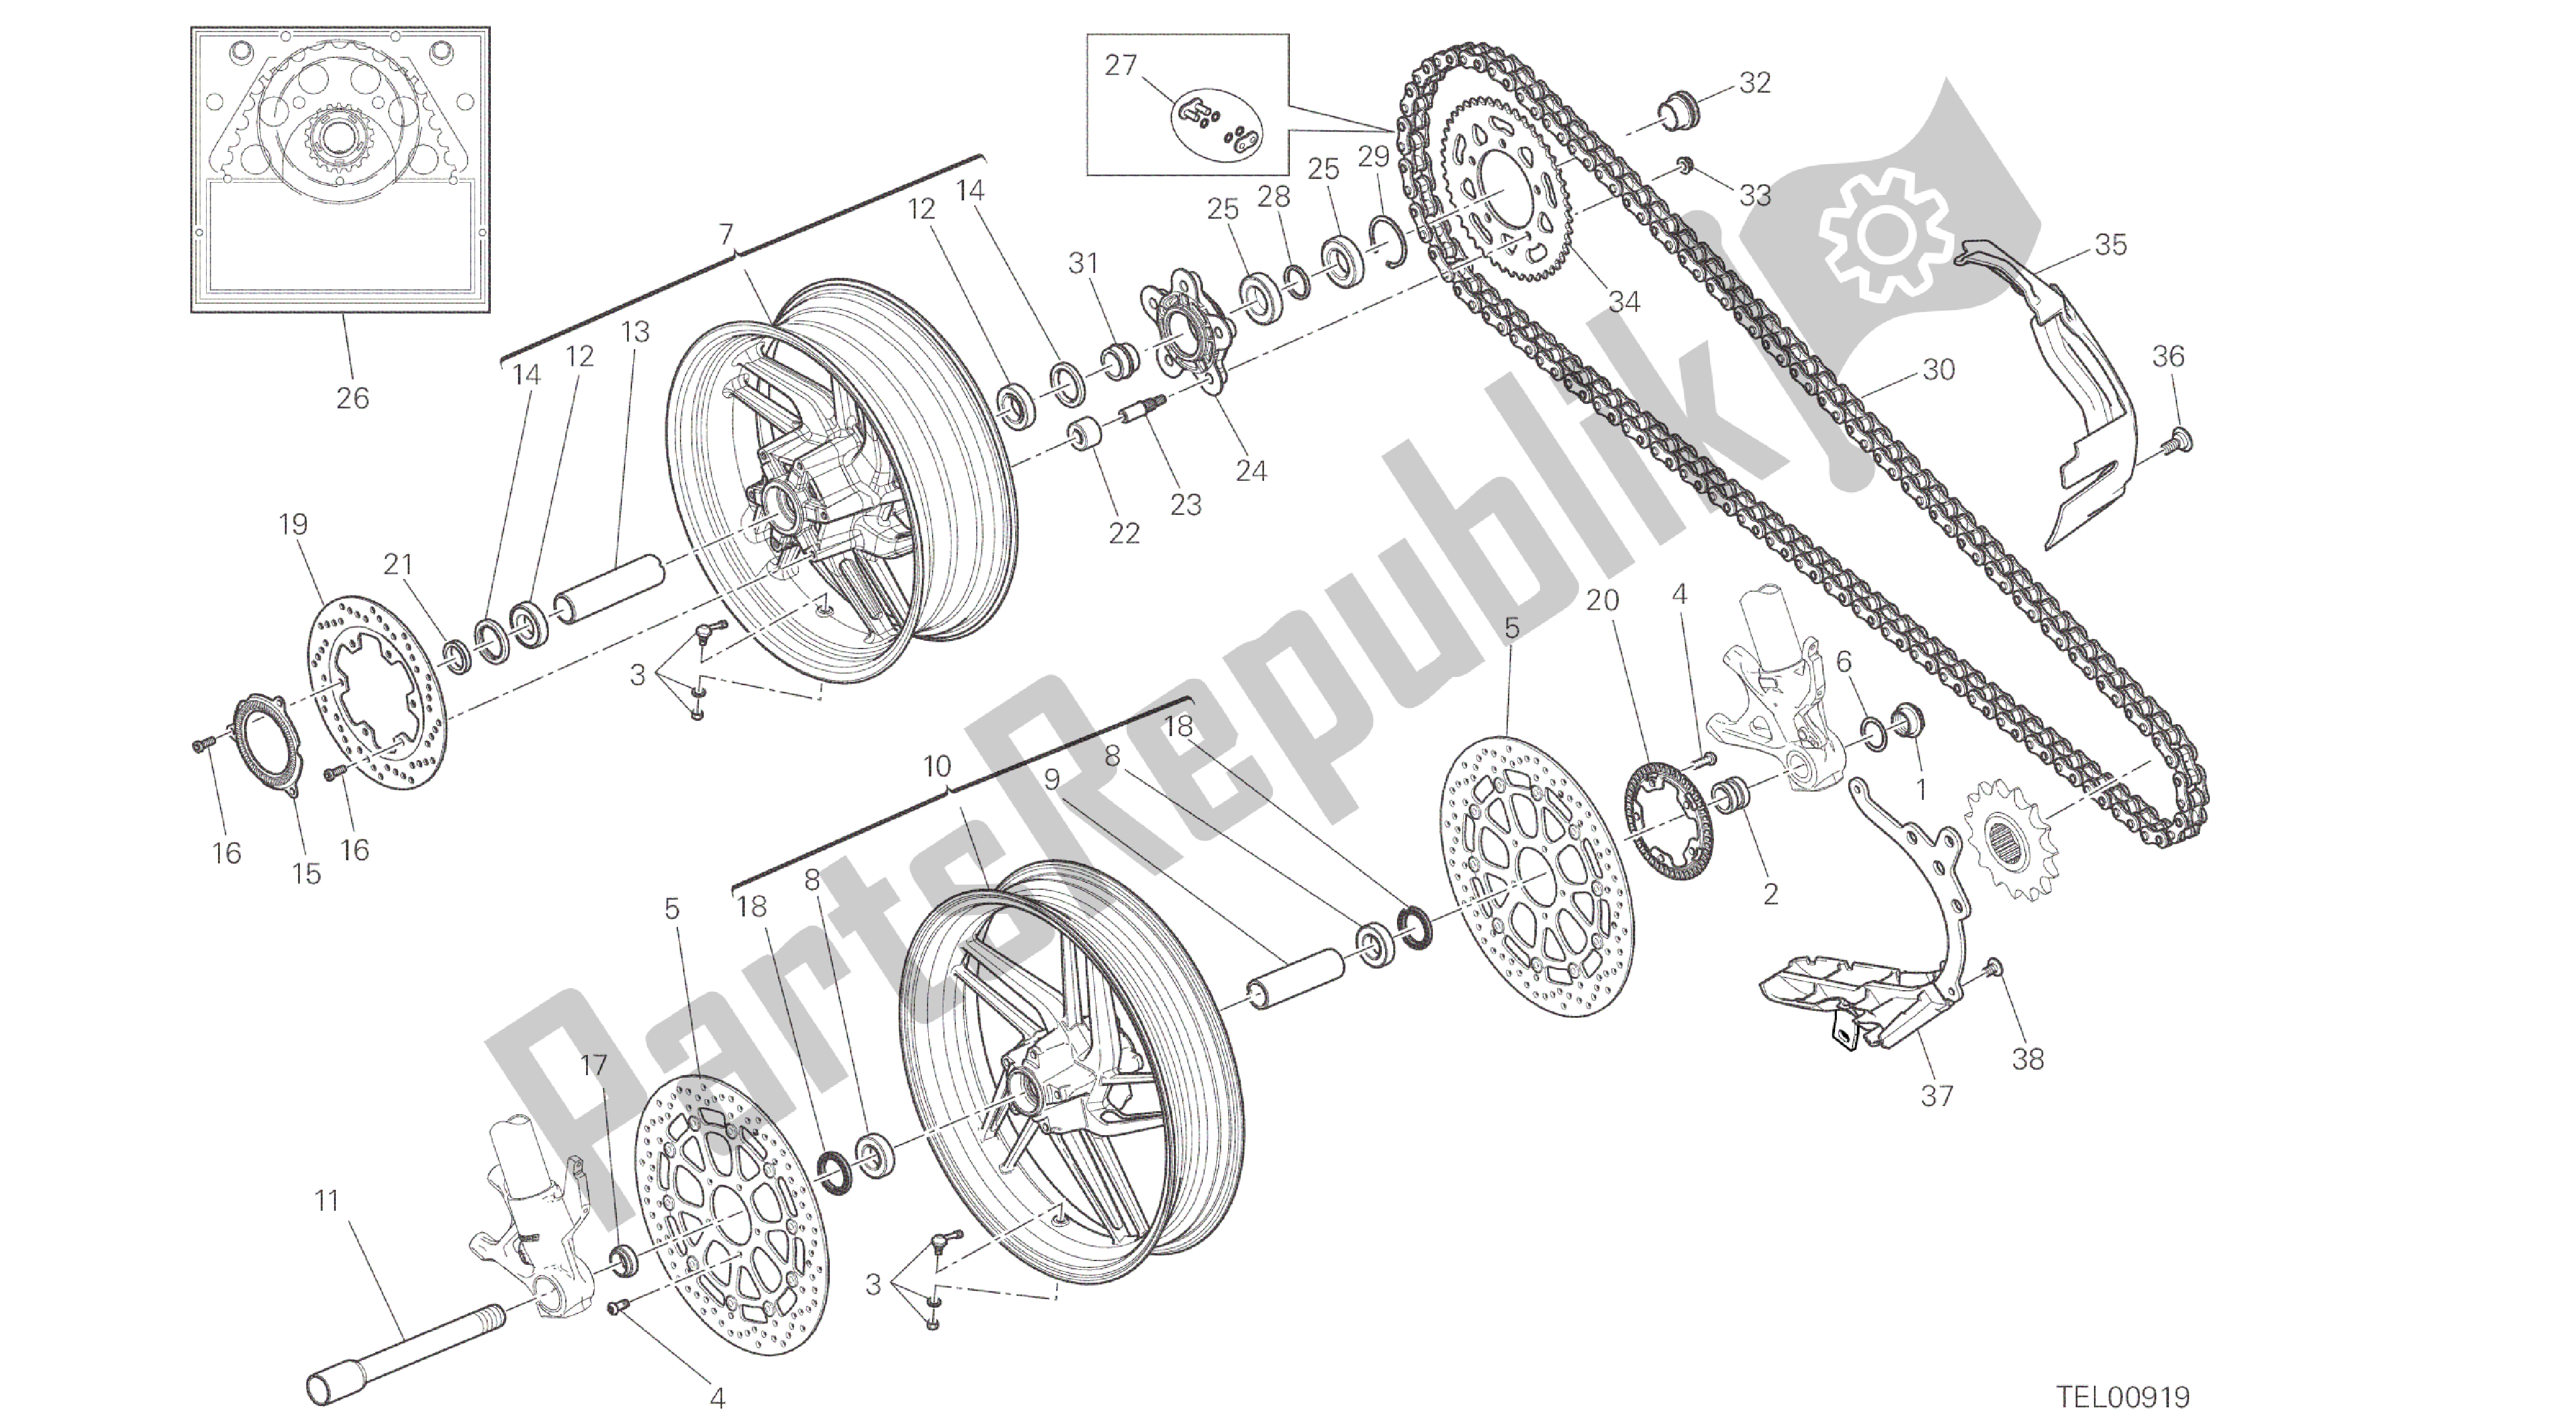 Todas las partes para Dibujo 026 - Ruota Anteriore E Posteriore [mod: 959,959aws; Xst: Marco De Grupo Aus, Eur, Fra, Jap, Twn] de Ducati Panigale 959 2016